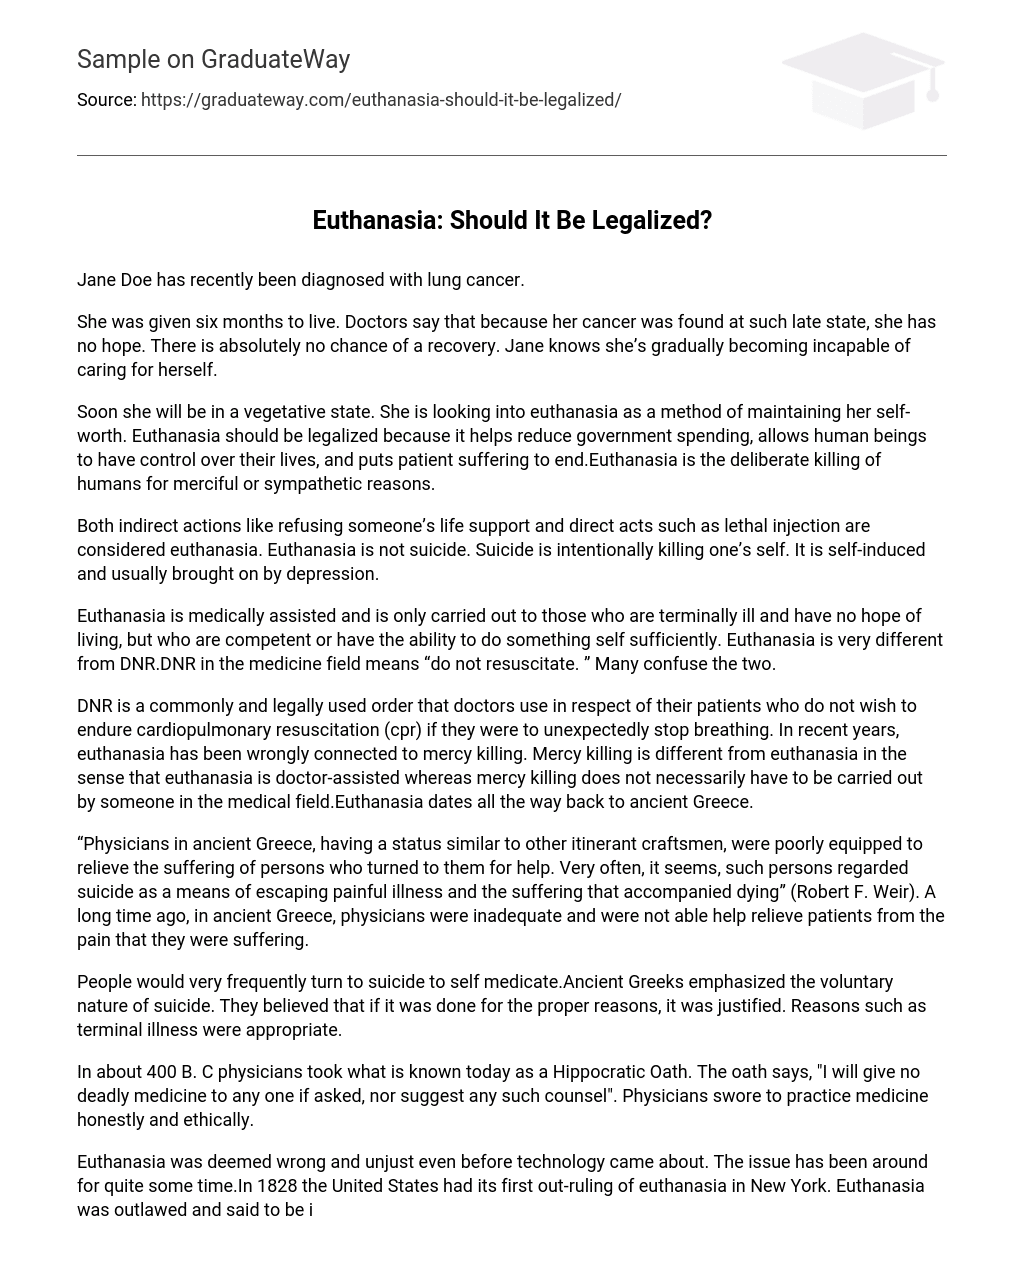 euthanasia should not be legalized essay